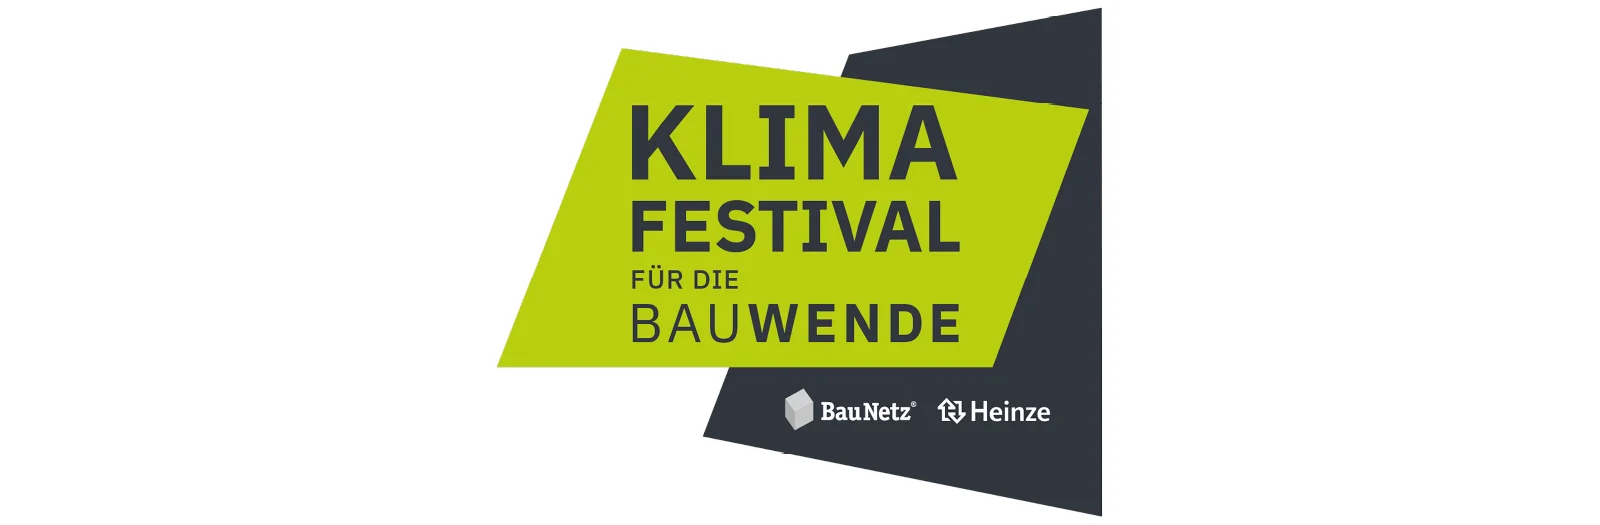 Klima Festival Berlin Image